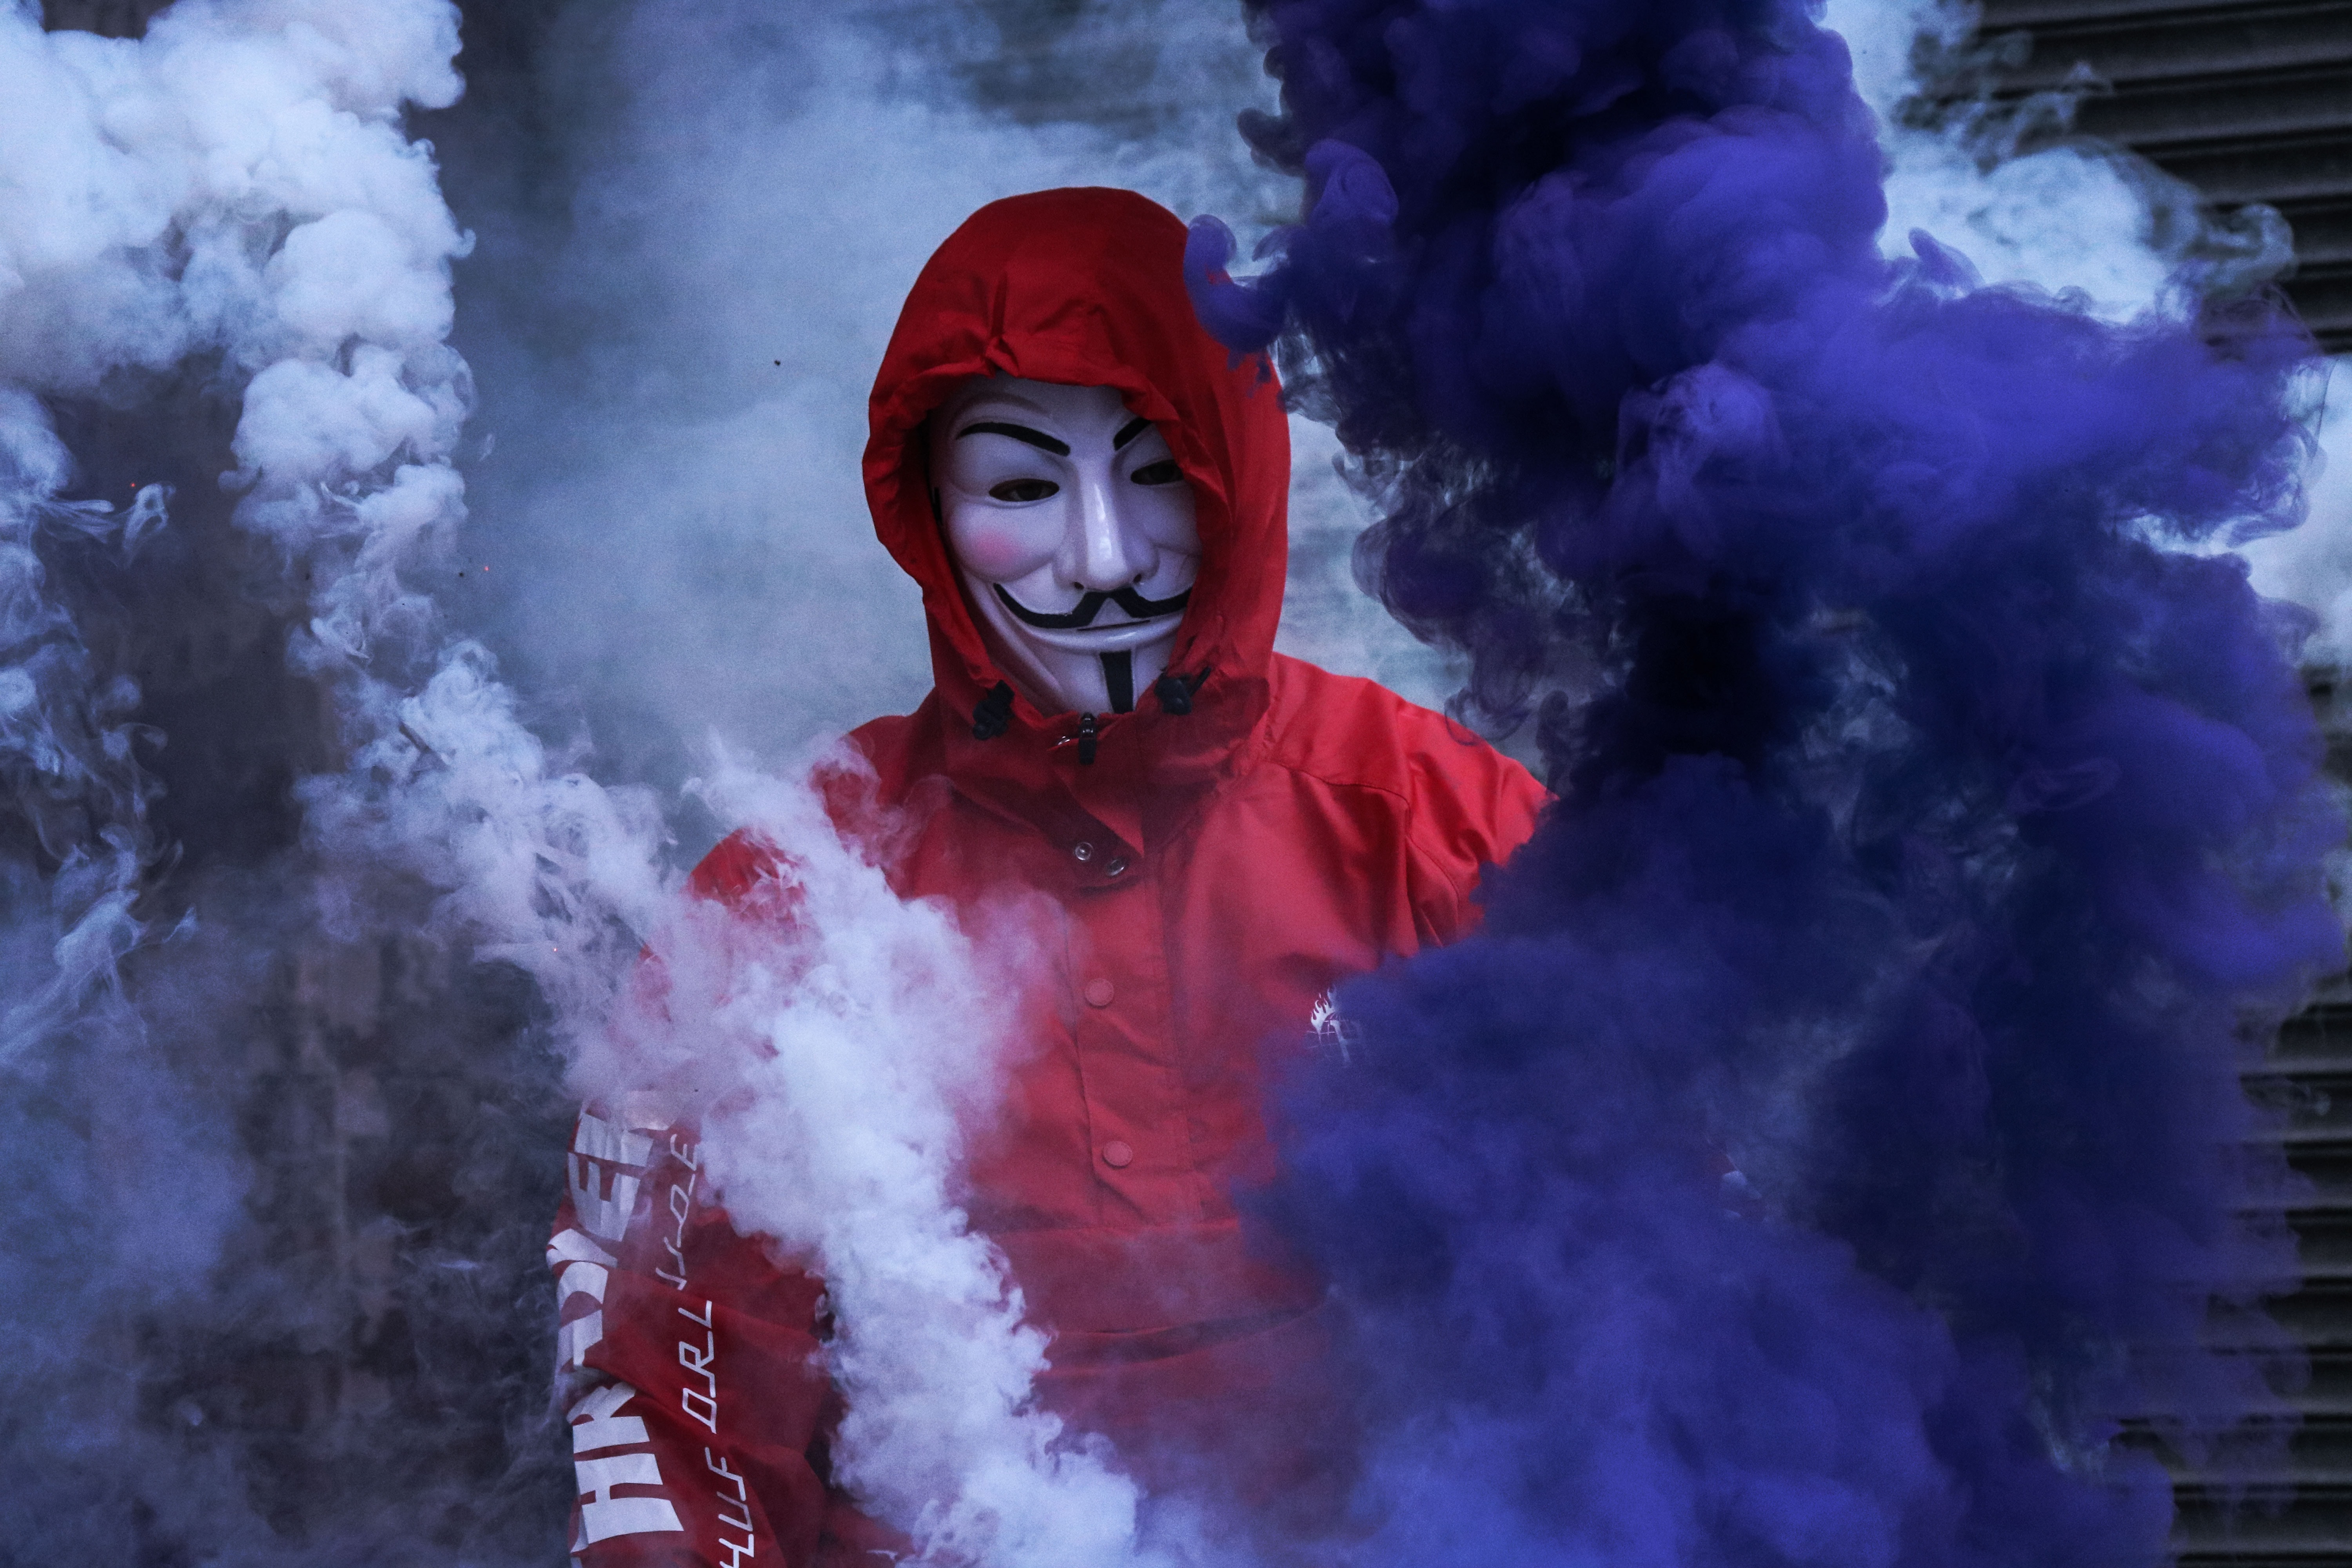 mask, anonymous, smoke, miscellanea, miscellaneous, smoke bomb High Definition image